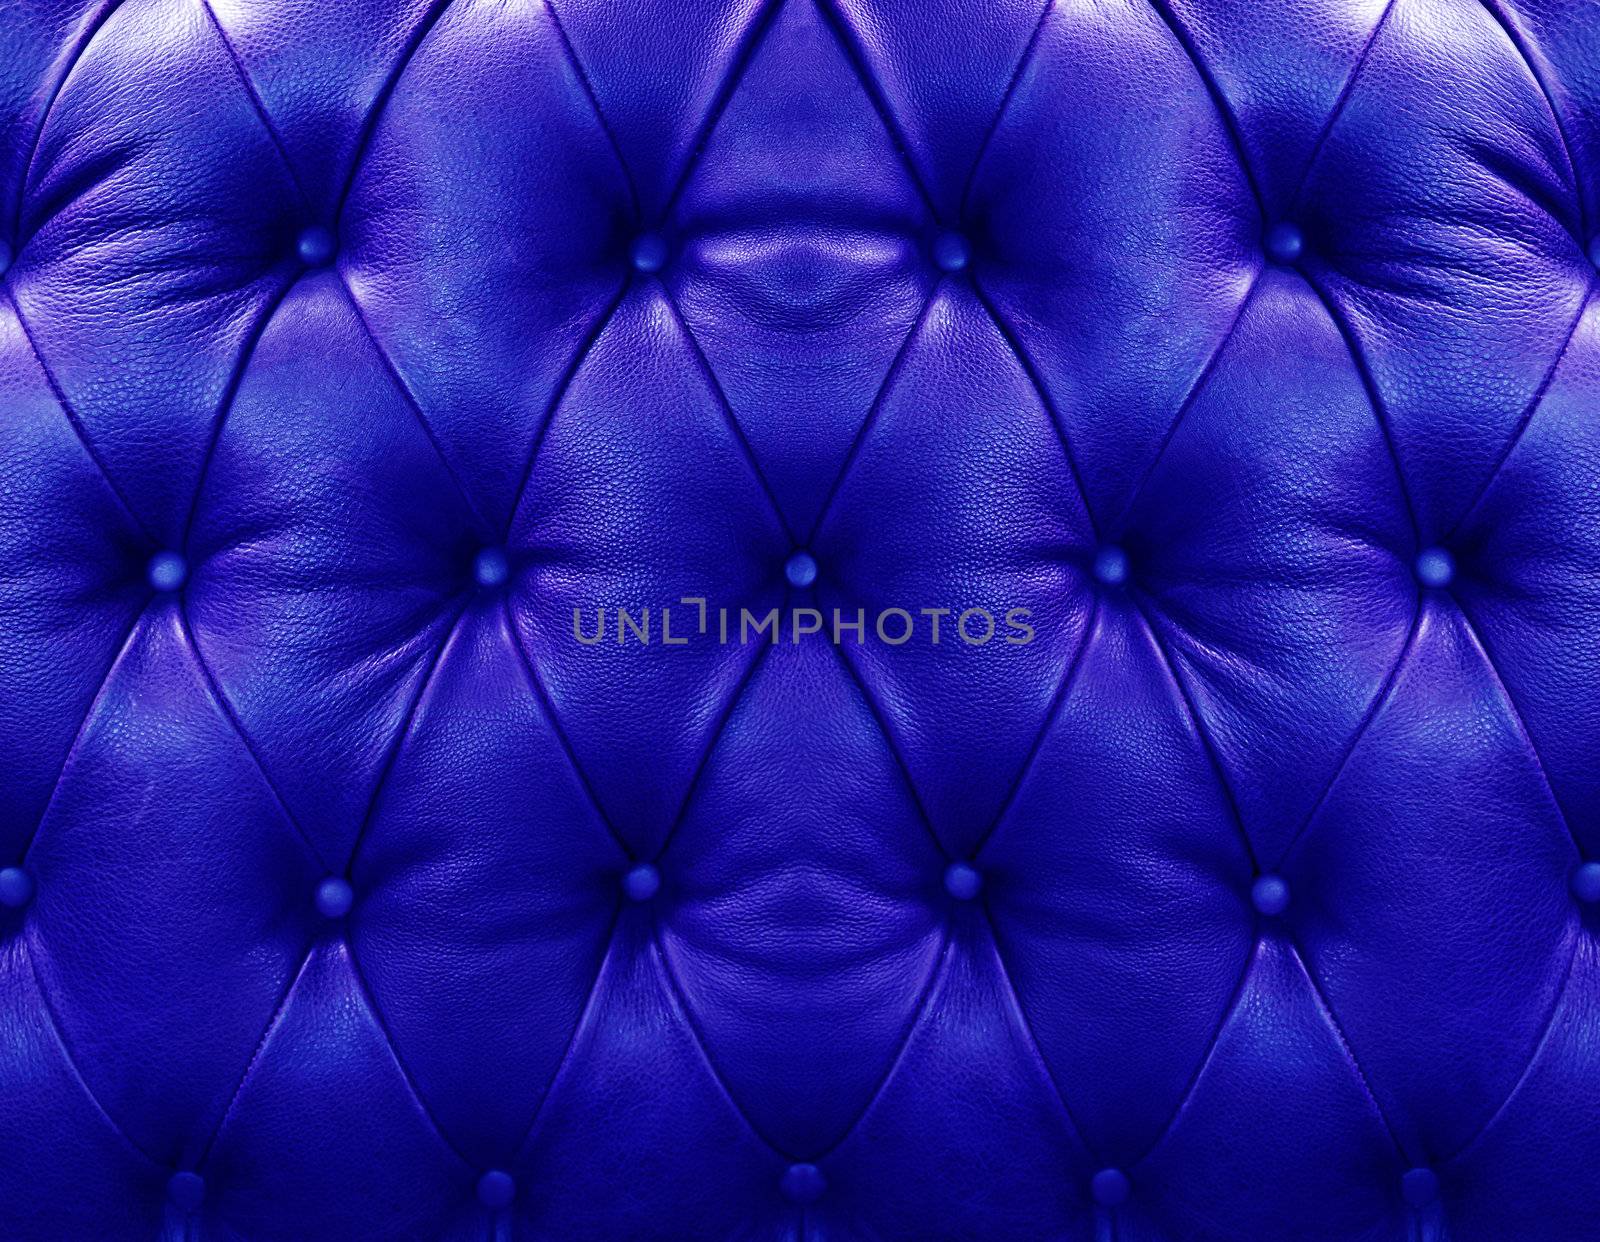  Dark blue upholstery leather  by stoonn